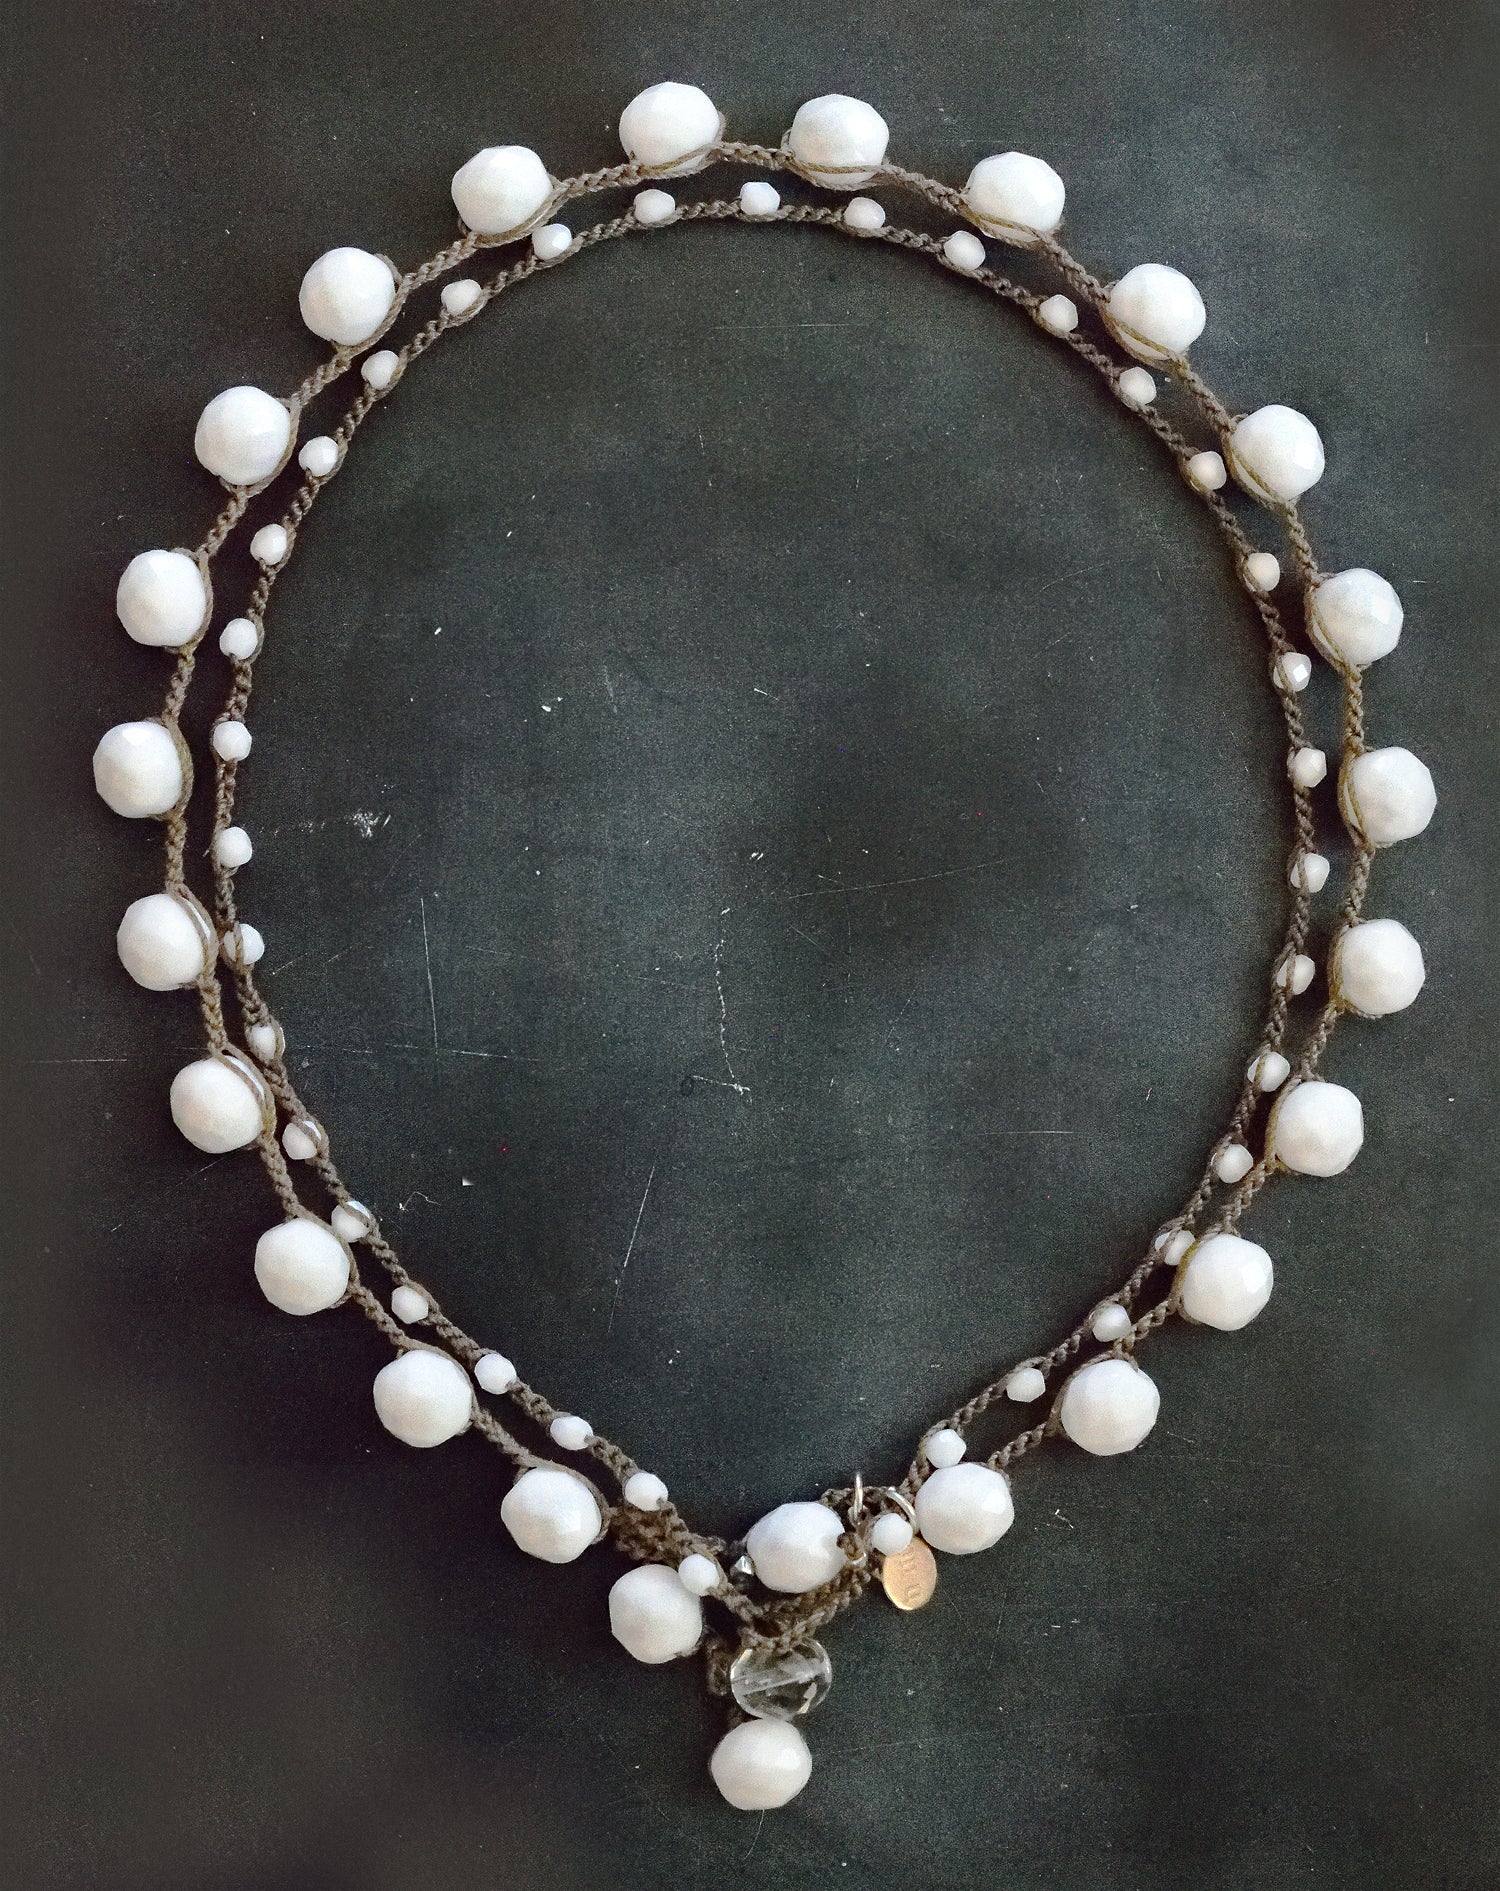 Unique Bargains Colored Beaded Necklaces Fashion Chain Necklaces for Women Ladies Alloy 1pc